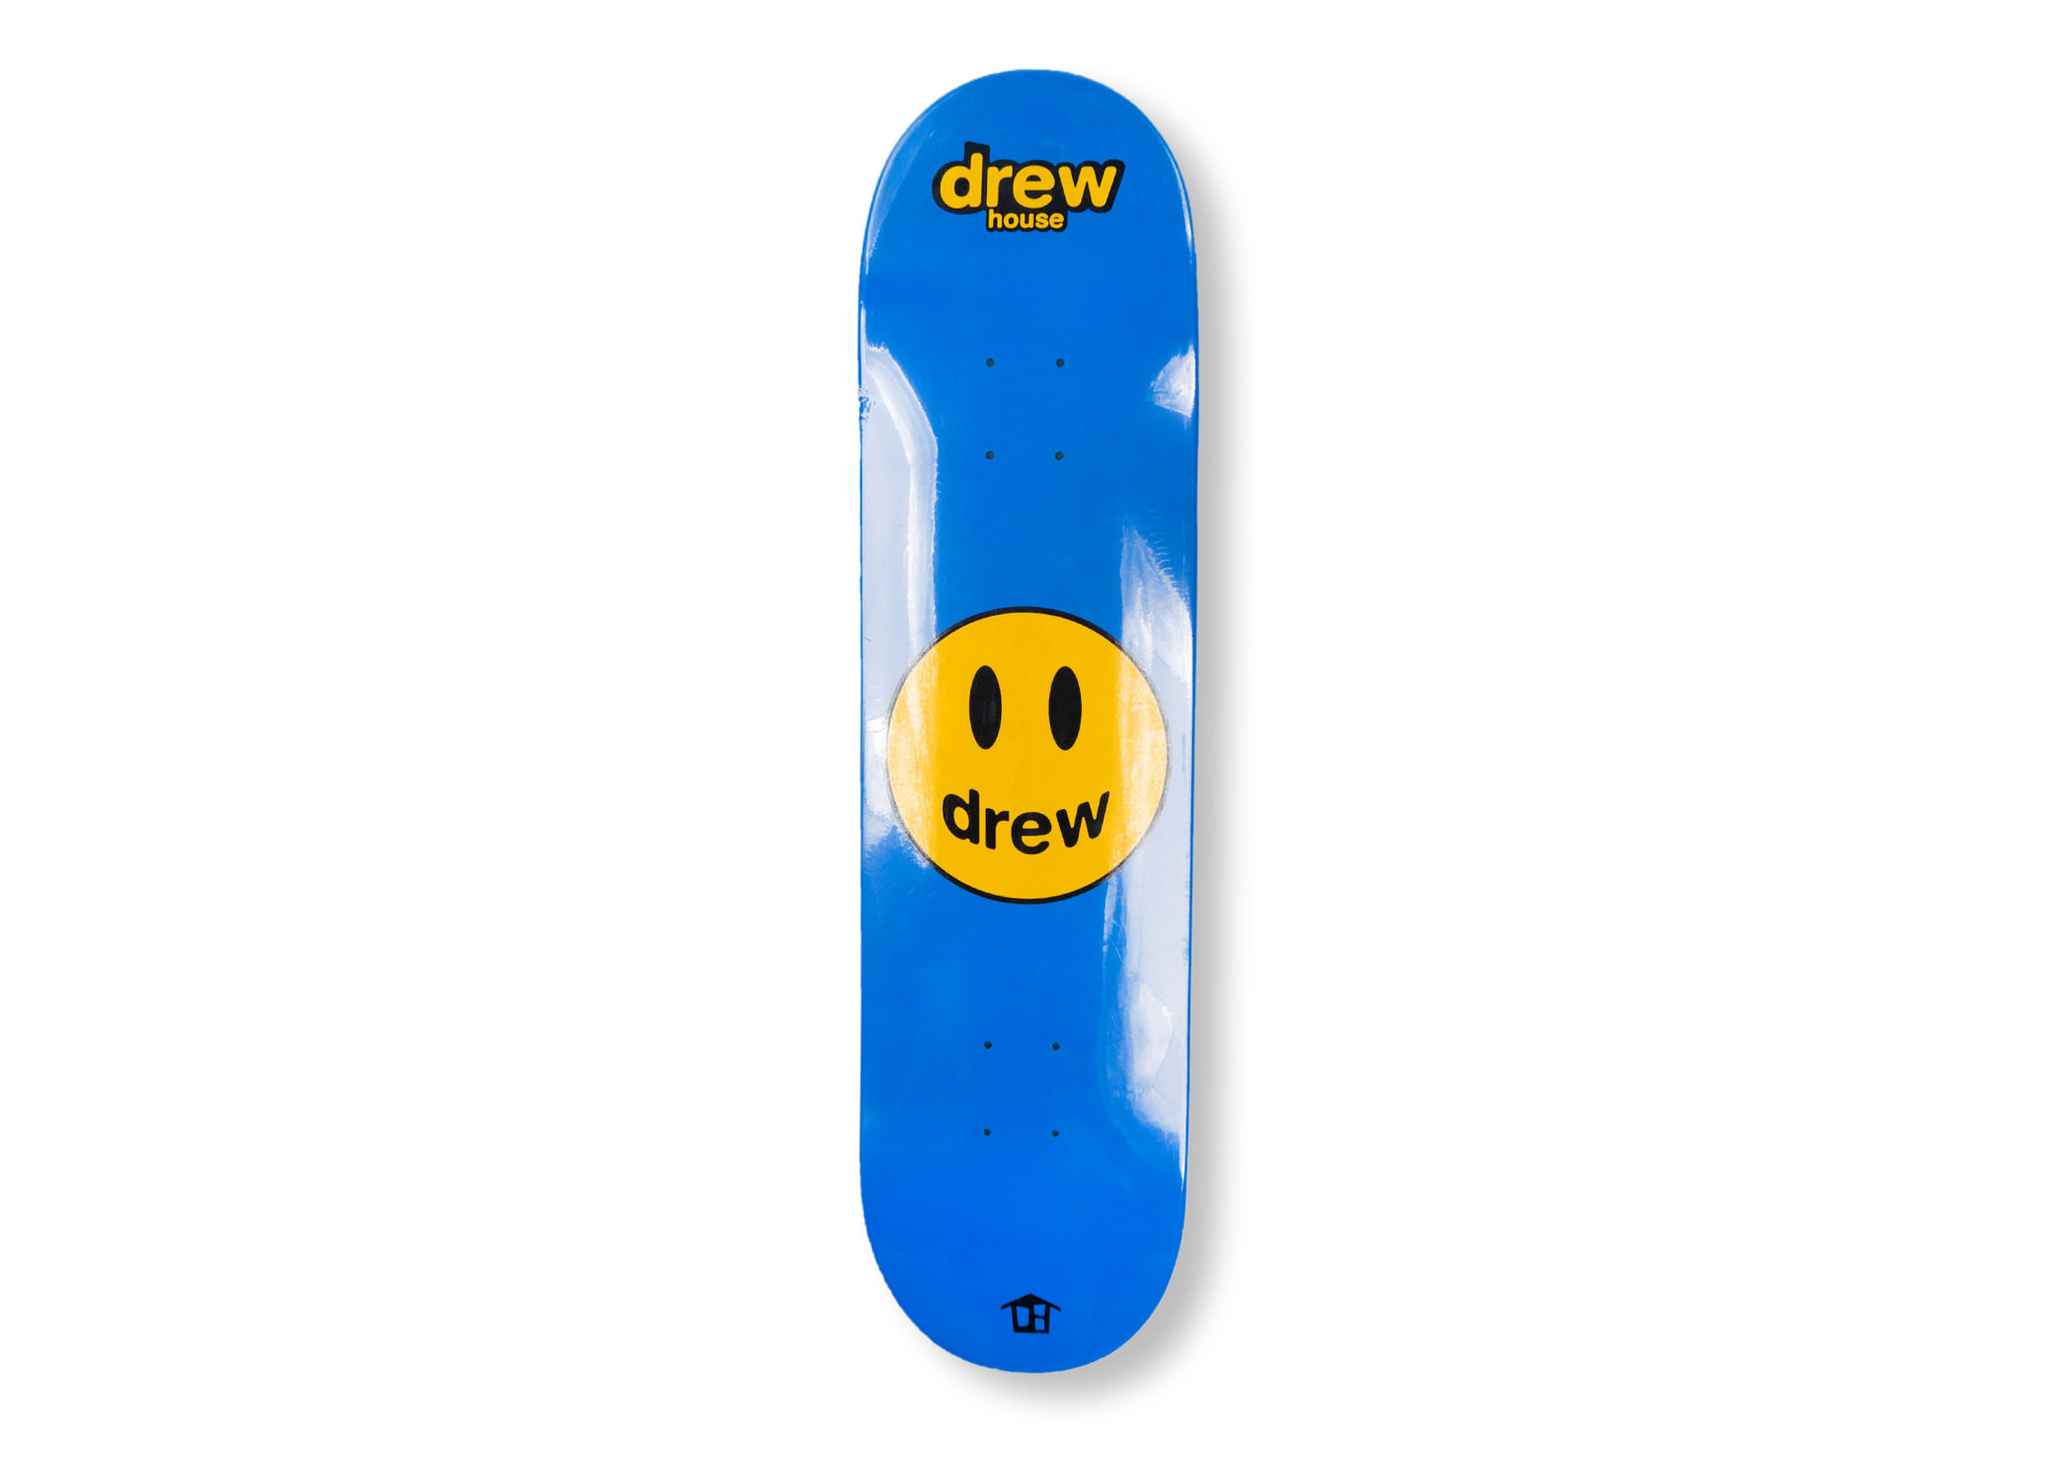 drew house yellow mascot deck スケートボード